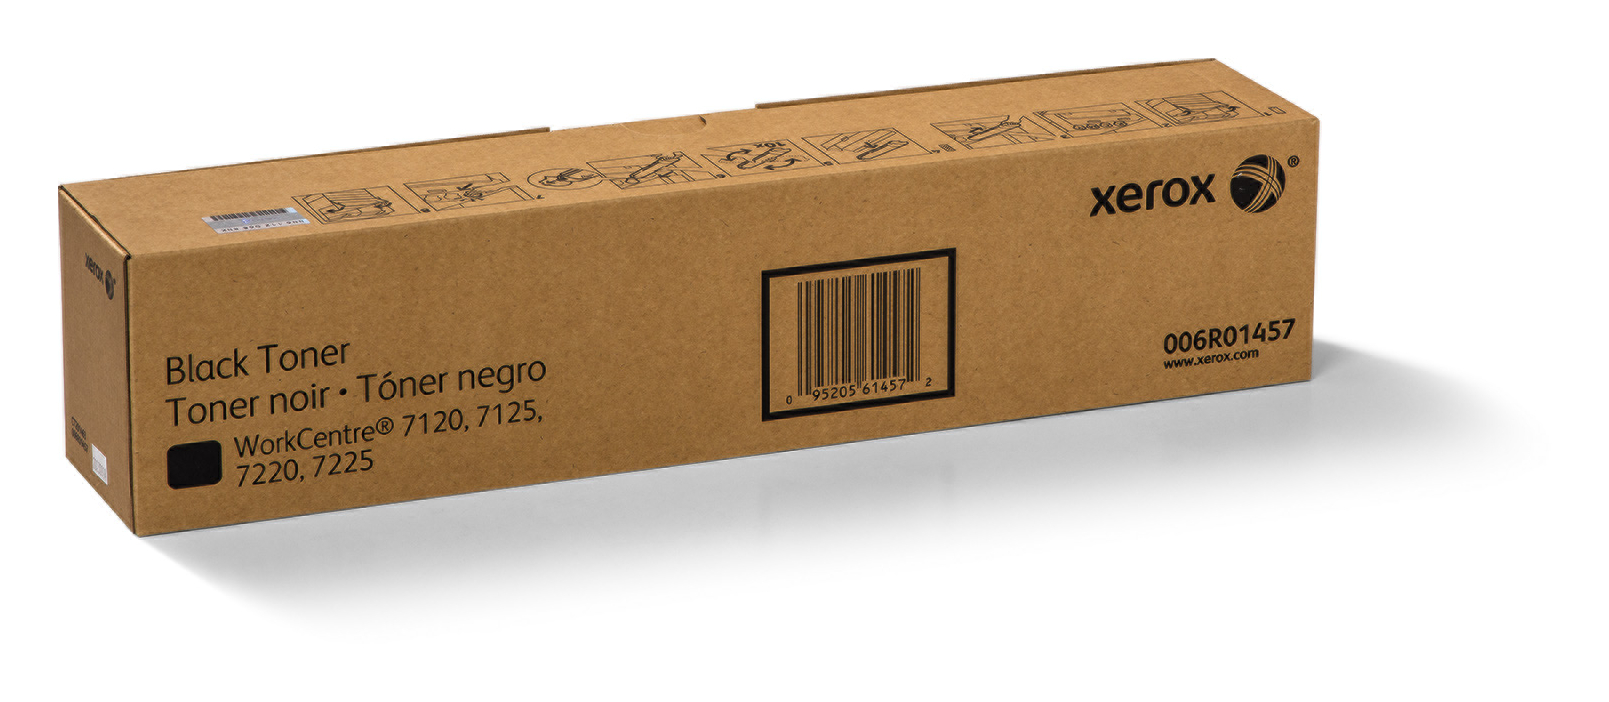 Black Toner Cartridge NA/ESG (Sold) 006R01457 Genuine Xerox Supplies